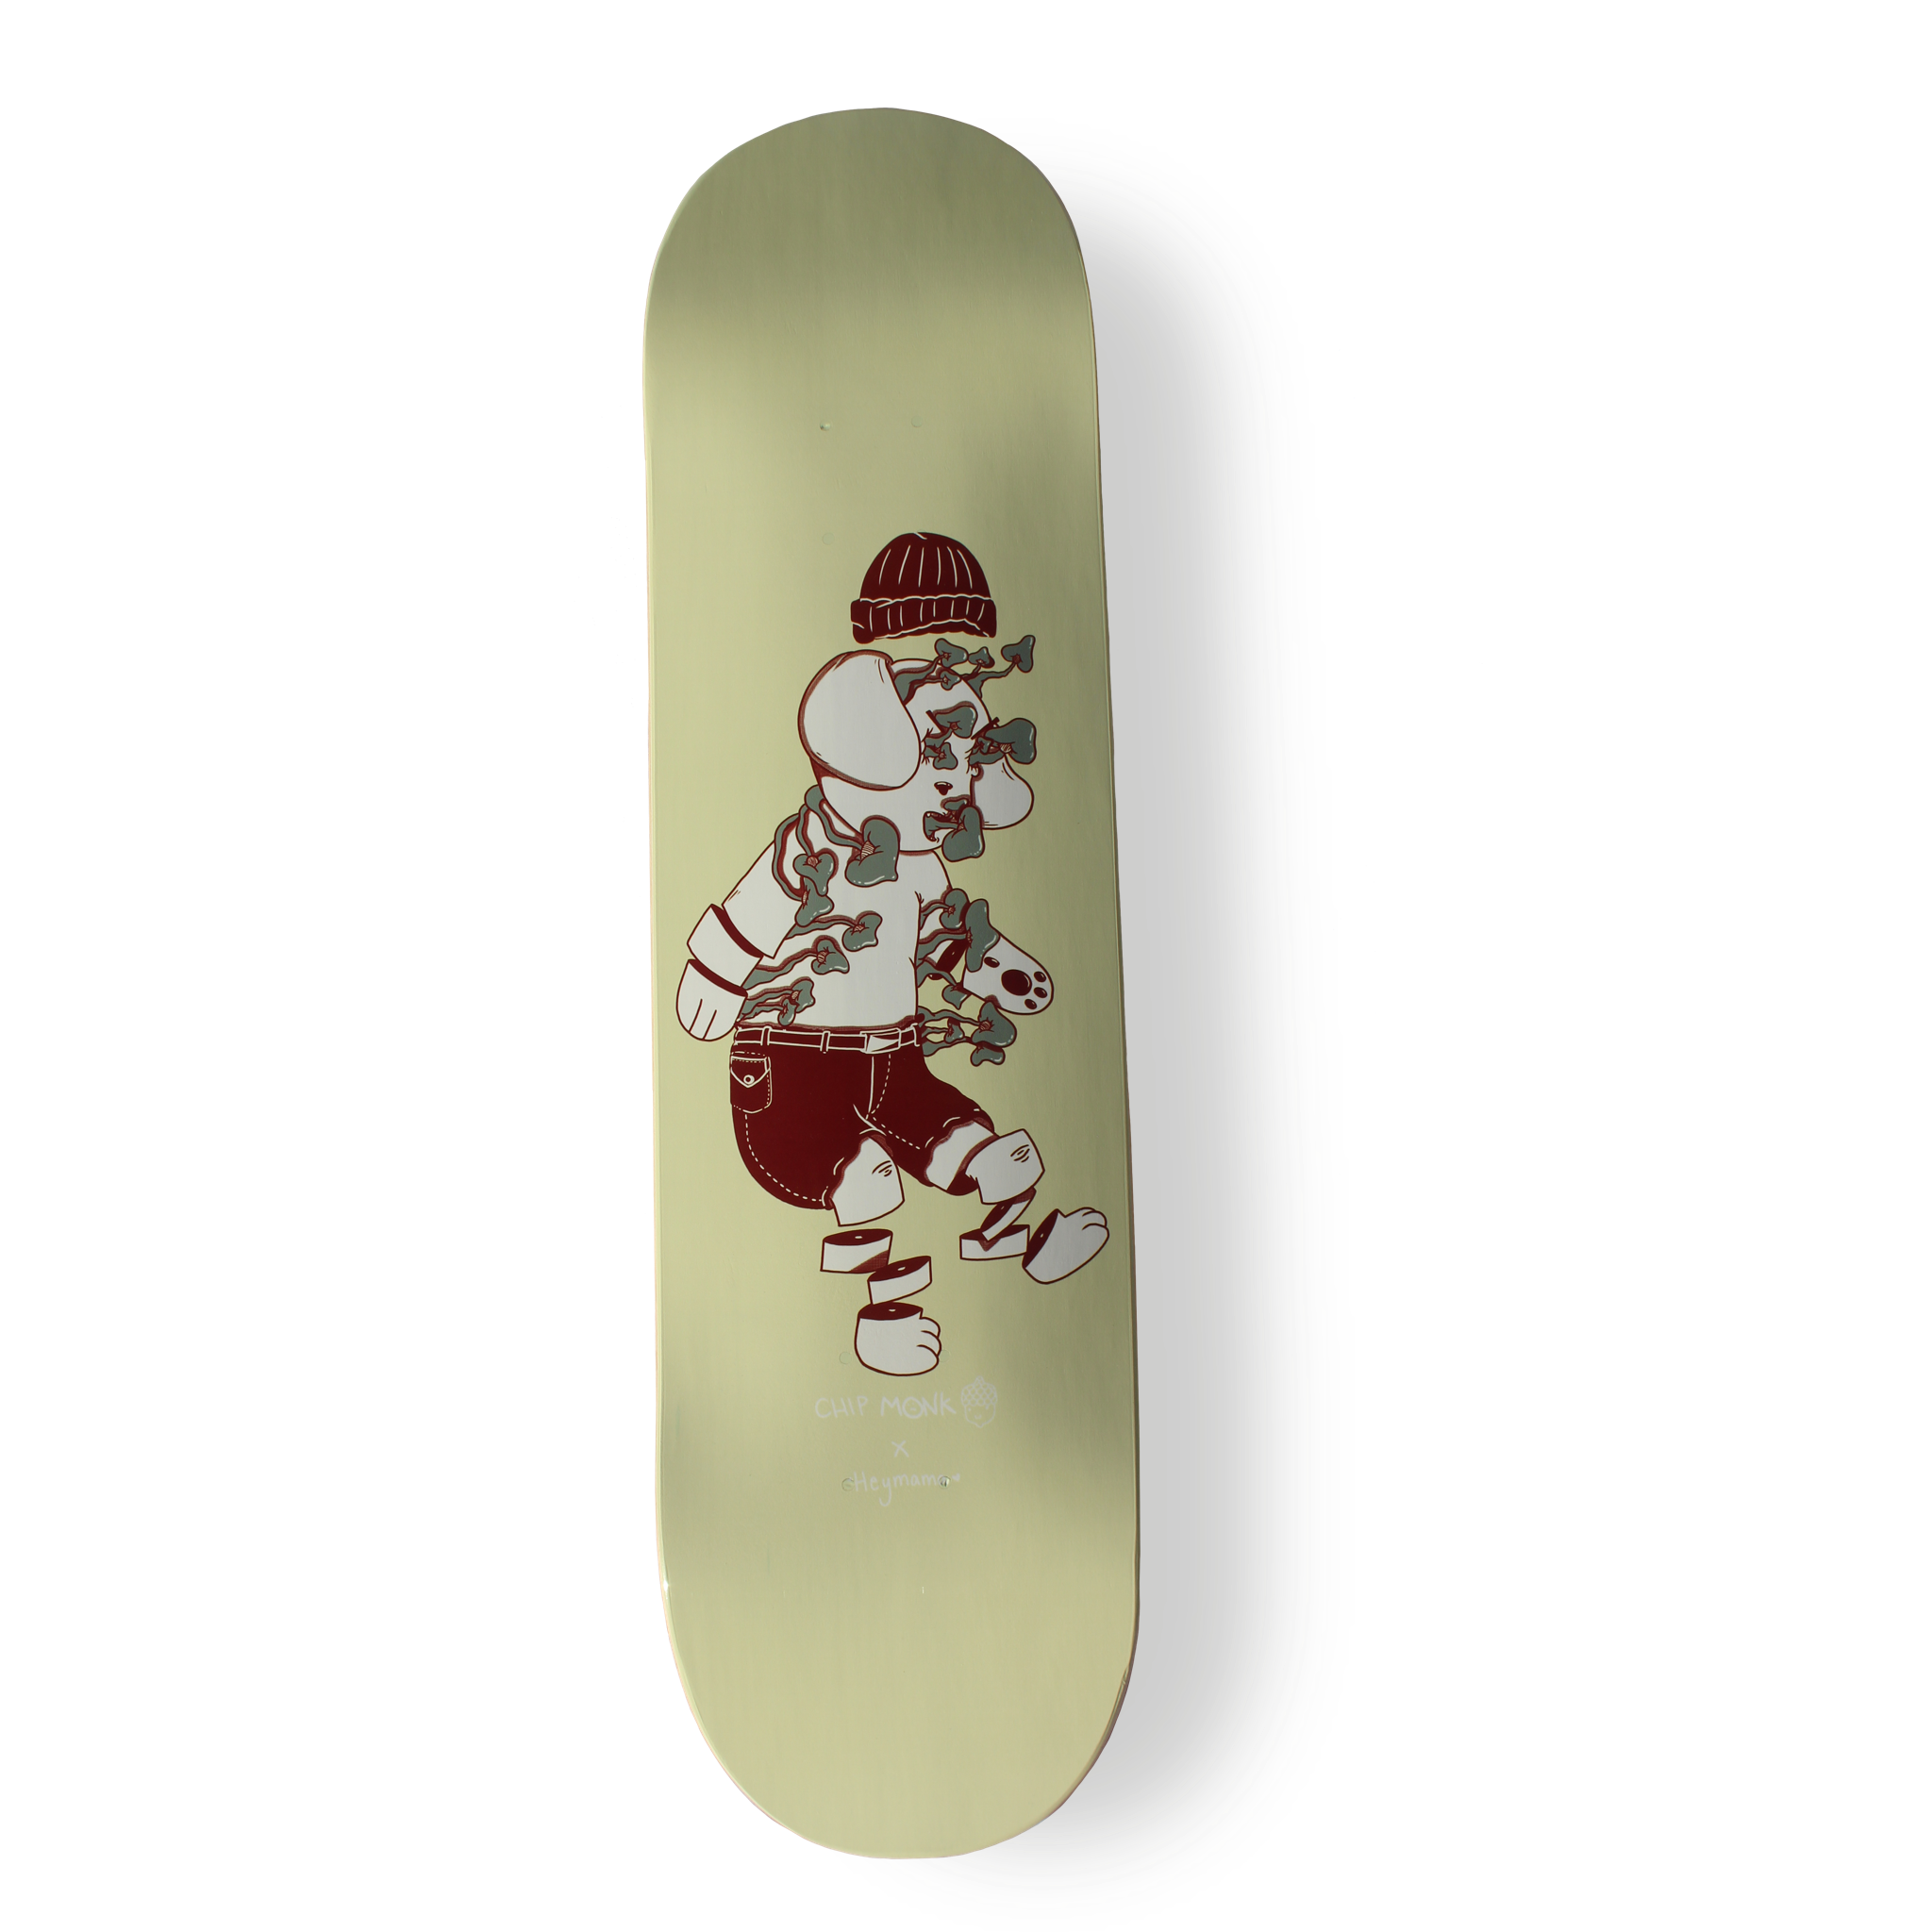 Heymama x Chipmonk Limited Edition Skateboard Deck